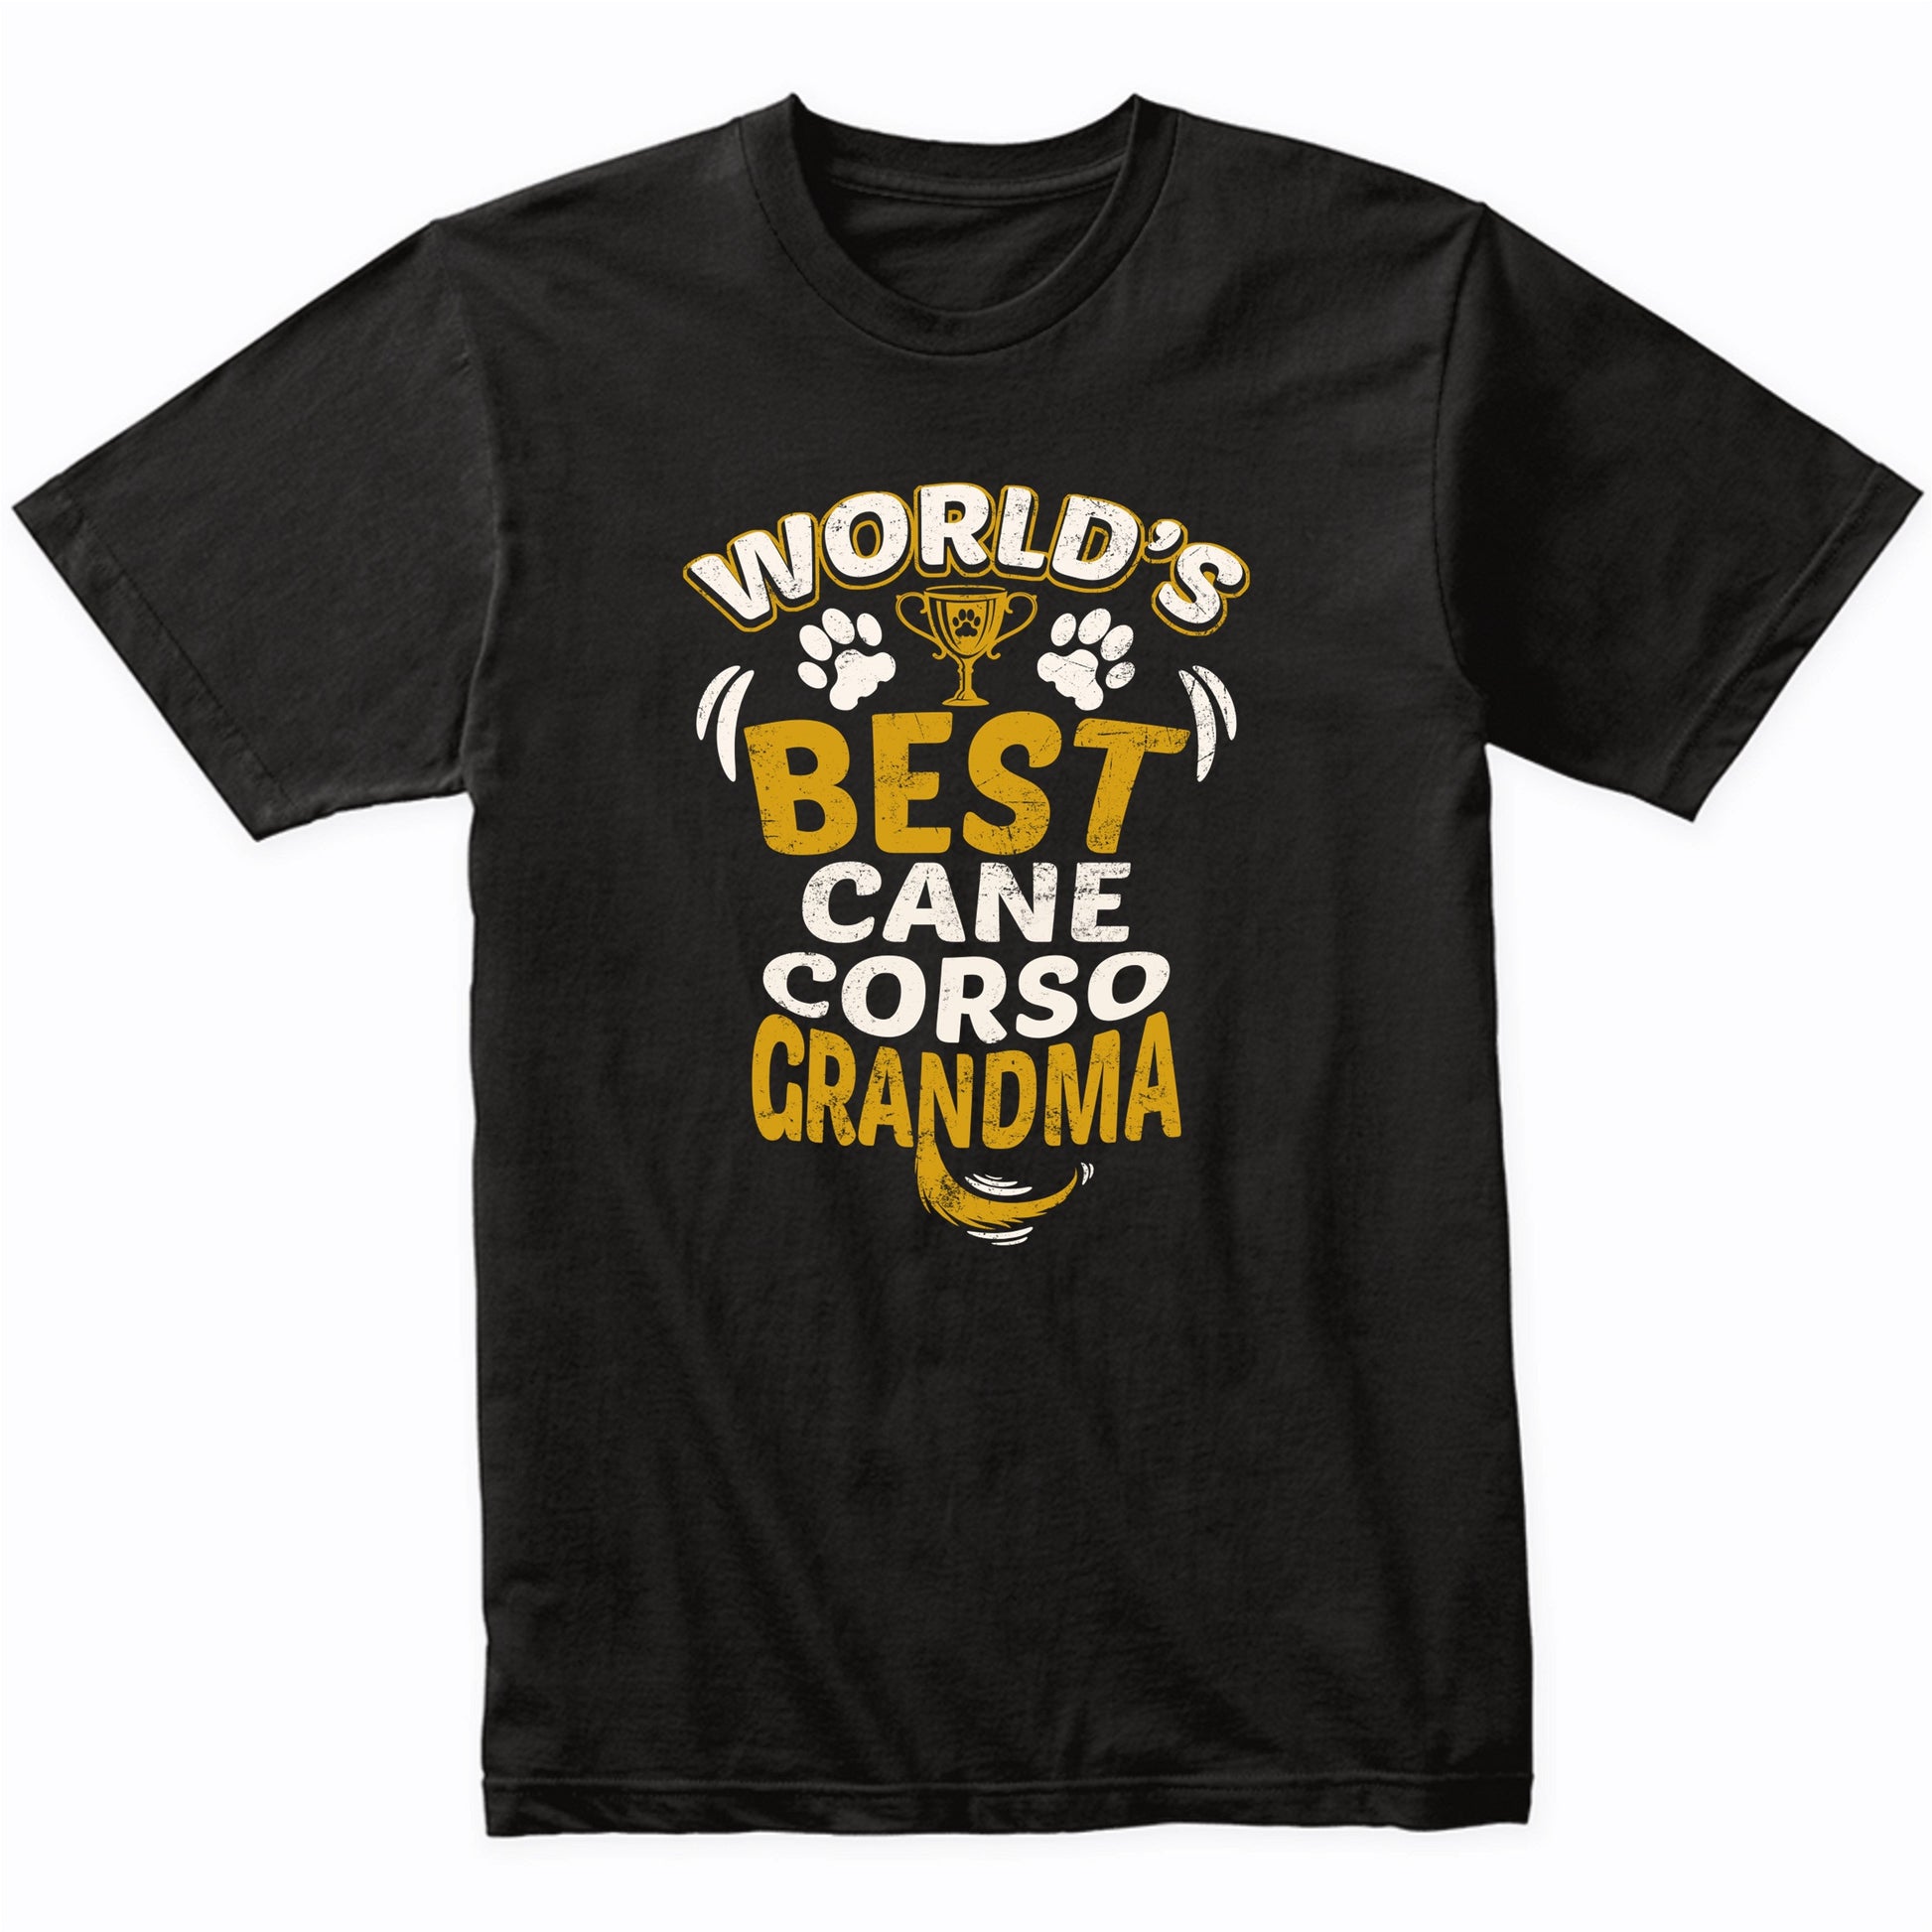 World's Best Cane Corso Grandma Graphic T-Shirt